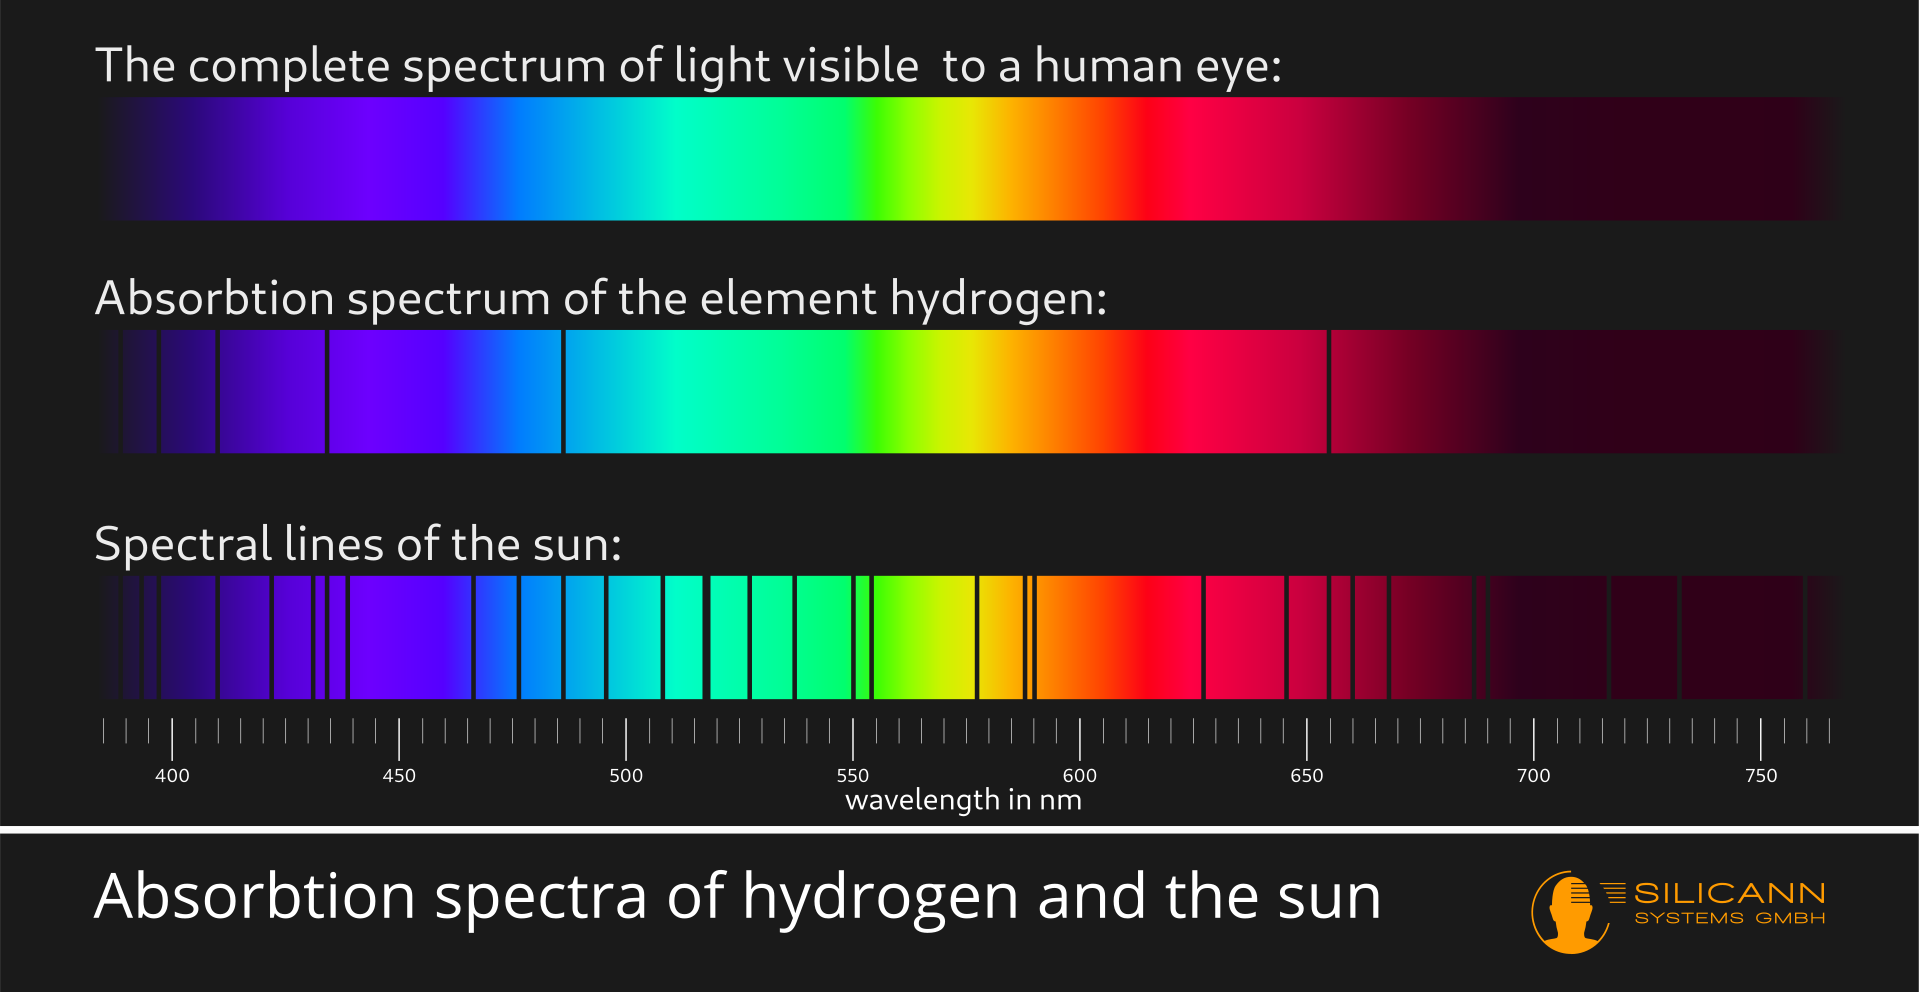 https://www.en.silicann.com/files/Blog/spectrometer-spectrophotometer/spectral-lines_hydrogen_sun.png